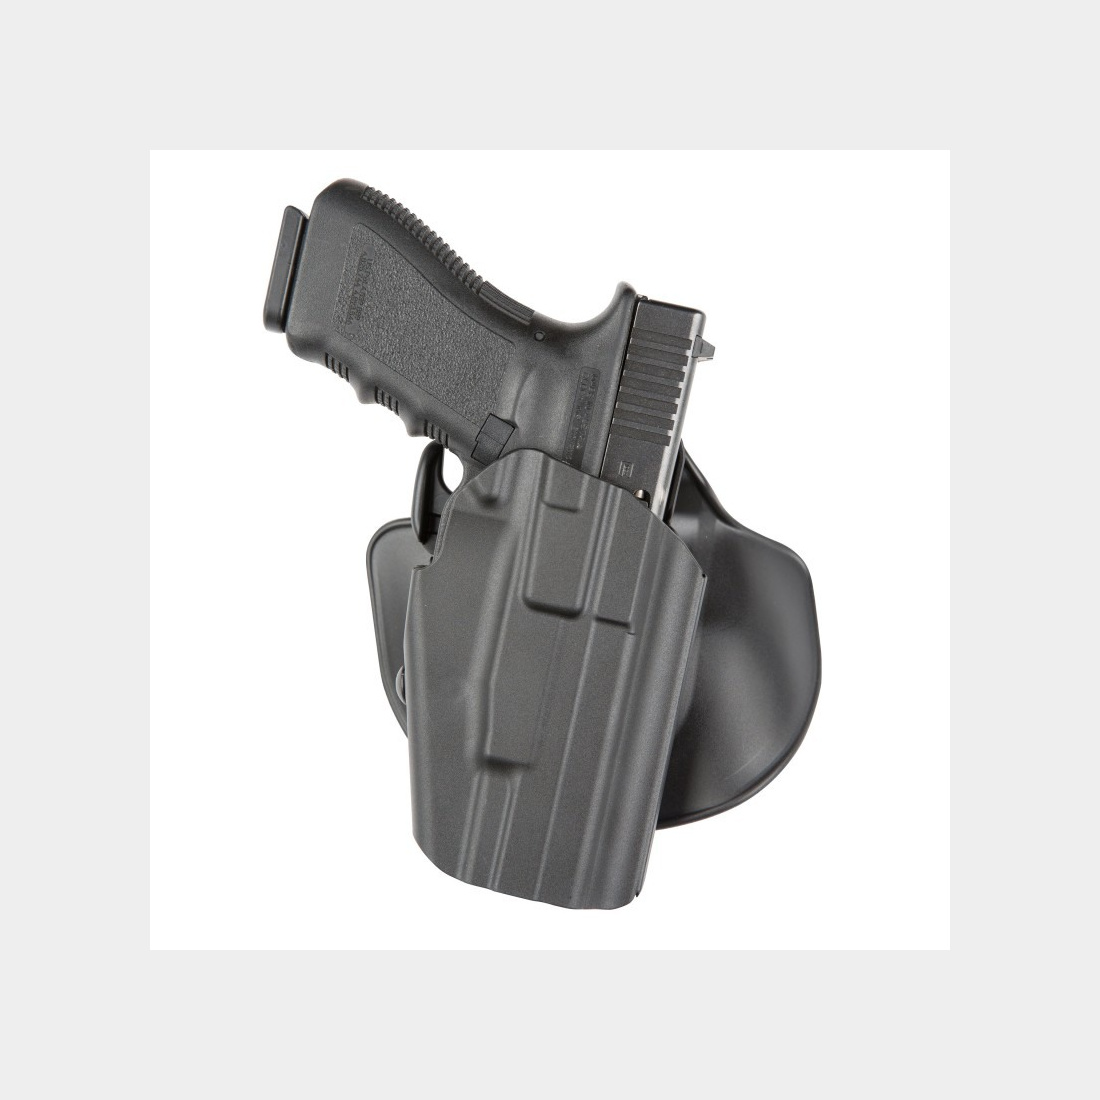 SAFARILAND 578 GLS "PRO-FIT" 7TS Paddleholster 183* Glock 26/27/30/30S/33/39,H&K P2000SK/P30SK,S&amp;W M&amp;P Shield/Compact,Walther P99C DAO/QA/AS/PPS 9mm,.40-Beige-Rechts